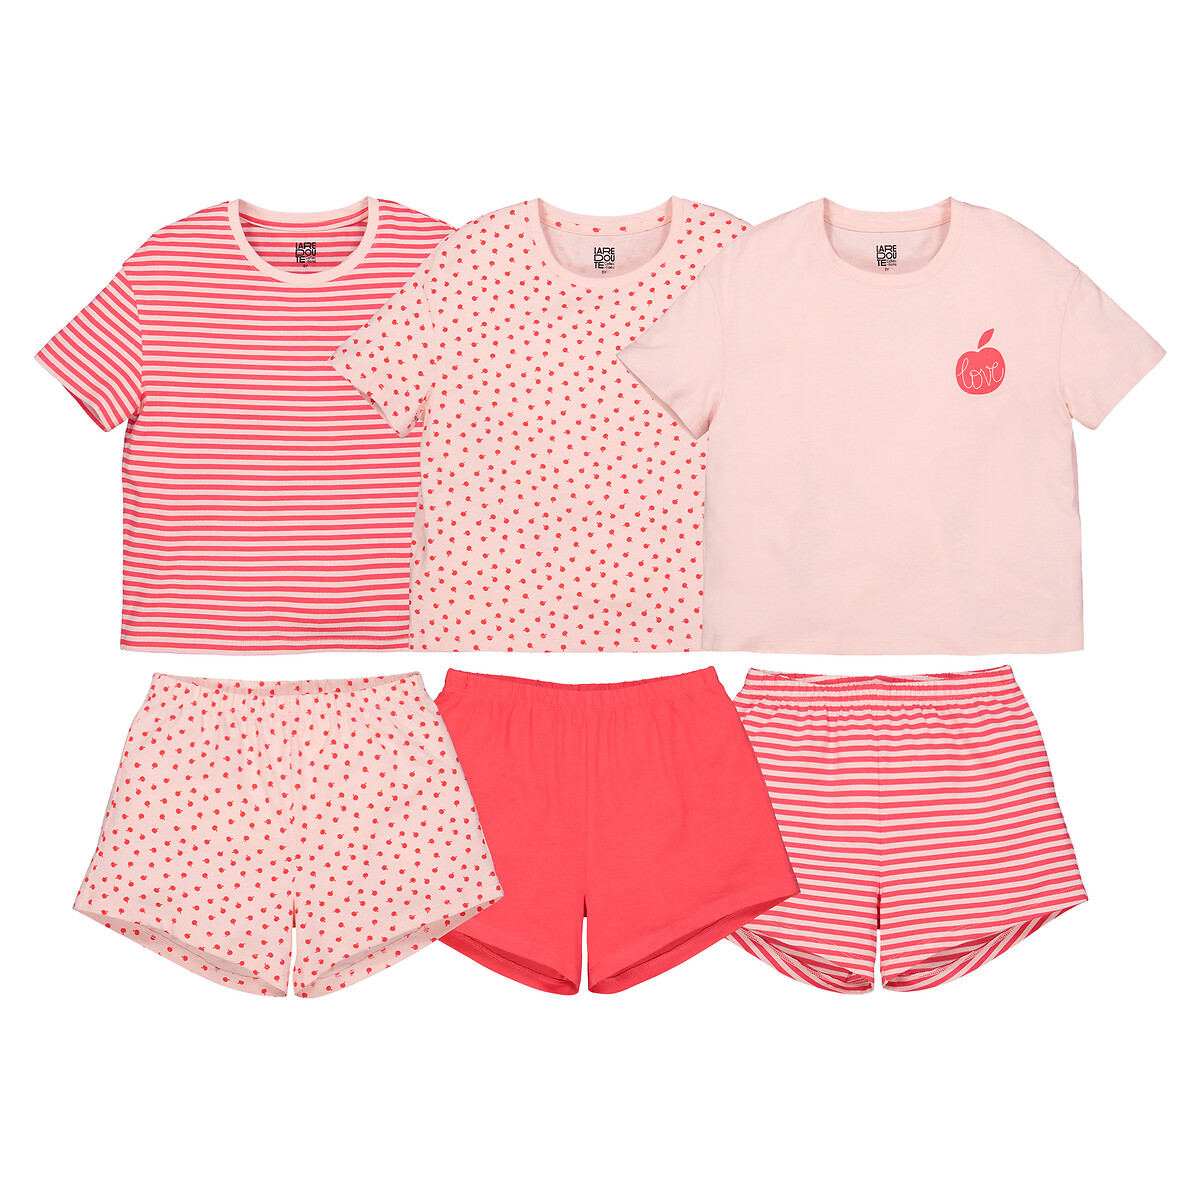 Комплект из трех пижам La Redoute 4 года - 102 см розовый комплект из трех слитных пижам la redoute 0 мес 50 см бежевый